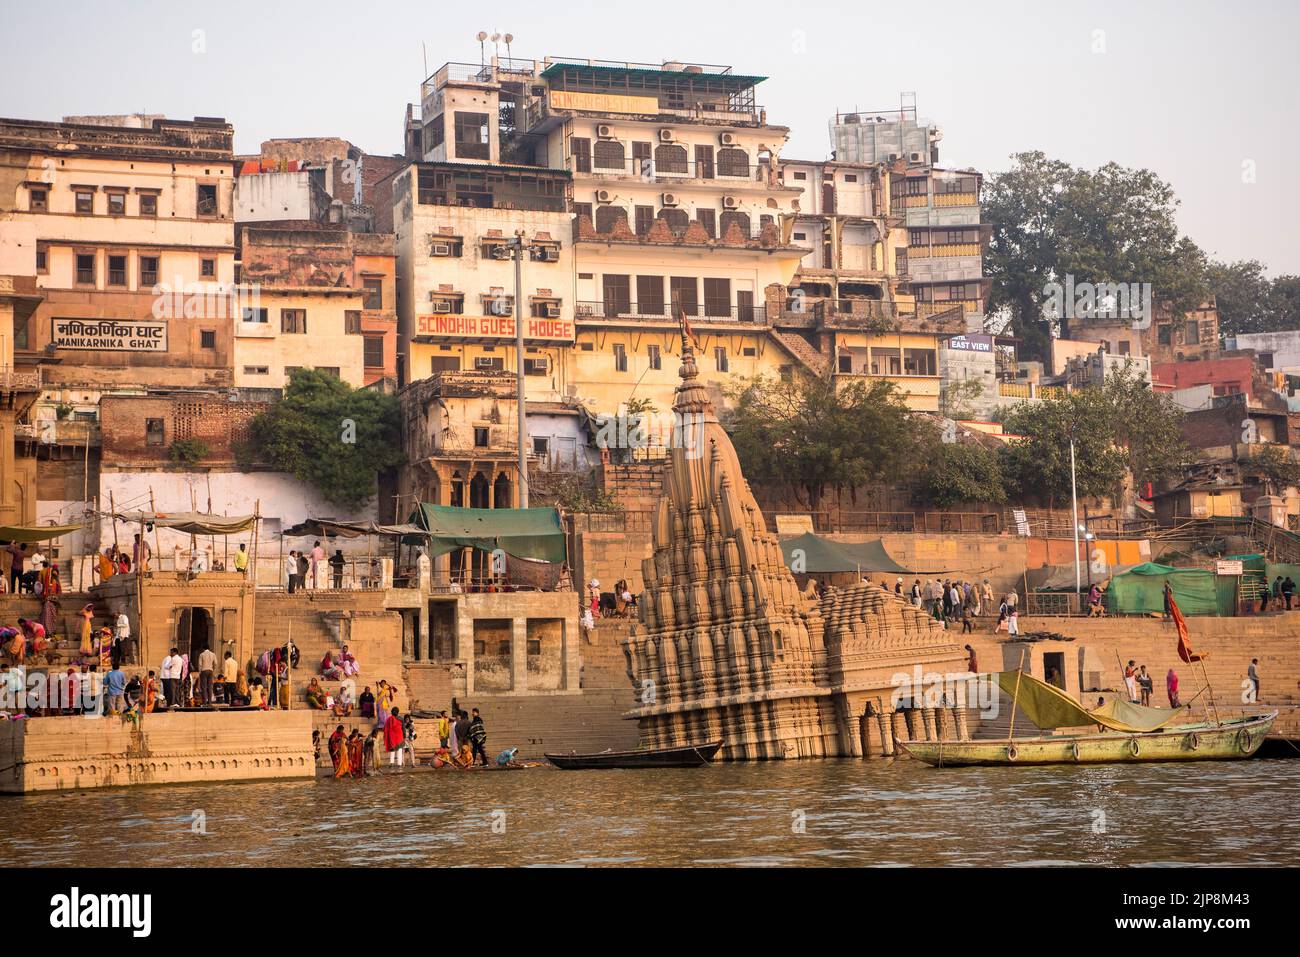 The Leaning Temple, Ratneshwar Mahadev Mandir, Scindia Ghat, Ganga river Ganges, Varanasi, Banaras, Benaras, Kashi, Uttar Pradesh, India Stock Photo